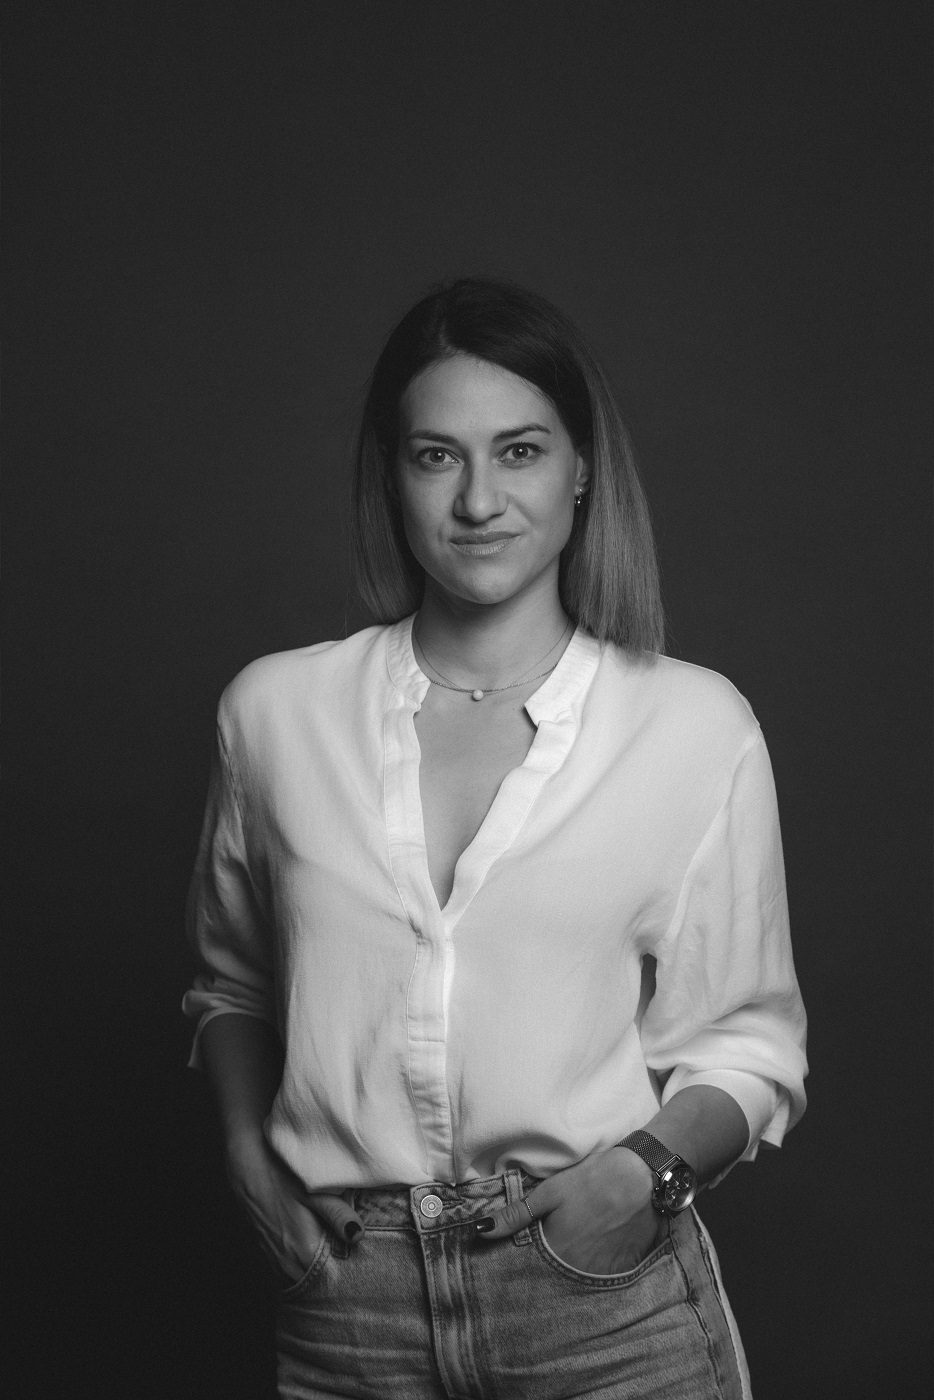 Lena Miladinović, koosnivač platforme Outpost chess